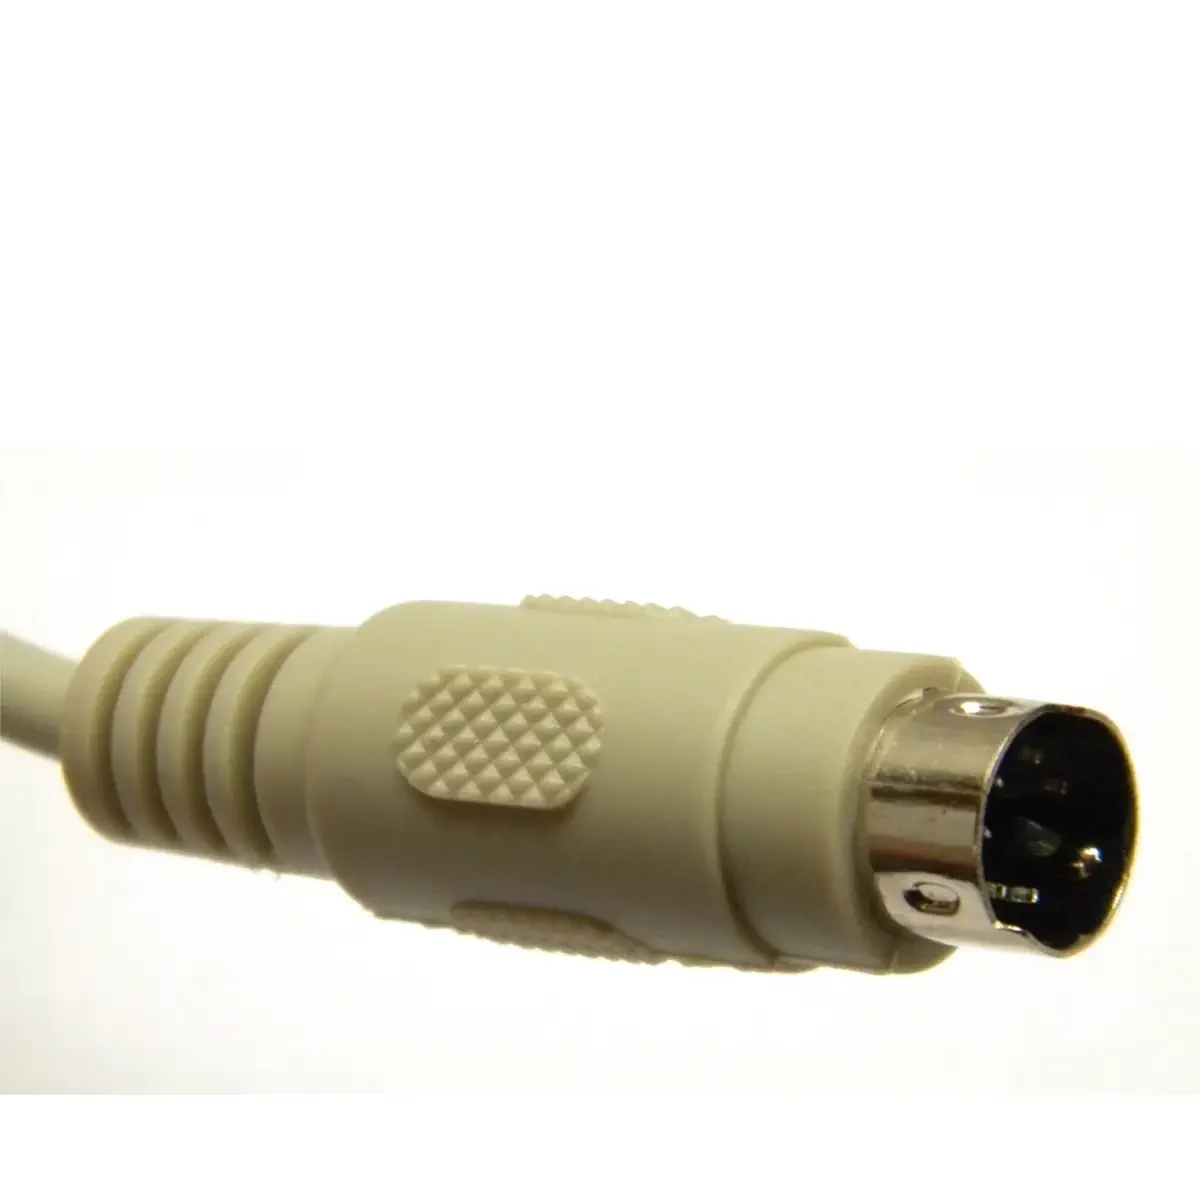 Tigertronics SignaLink USB SLUSB6PM plug view